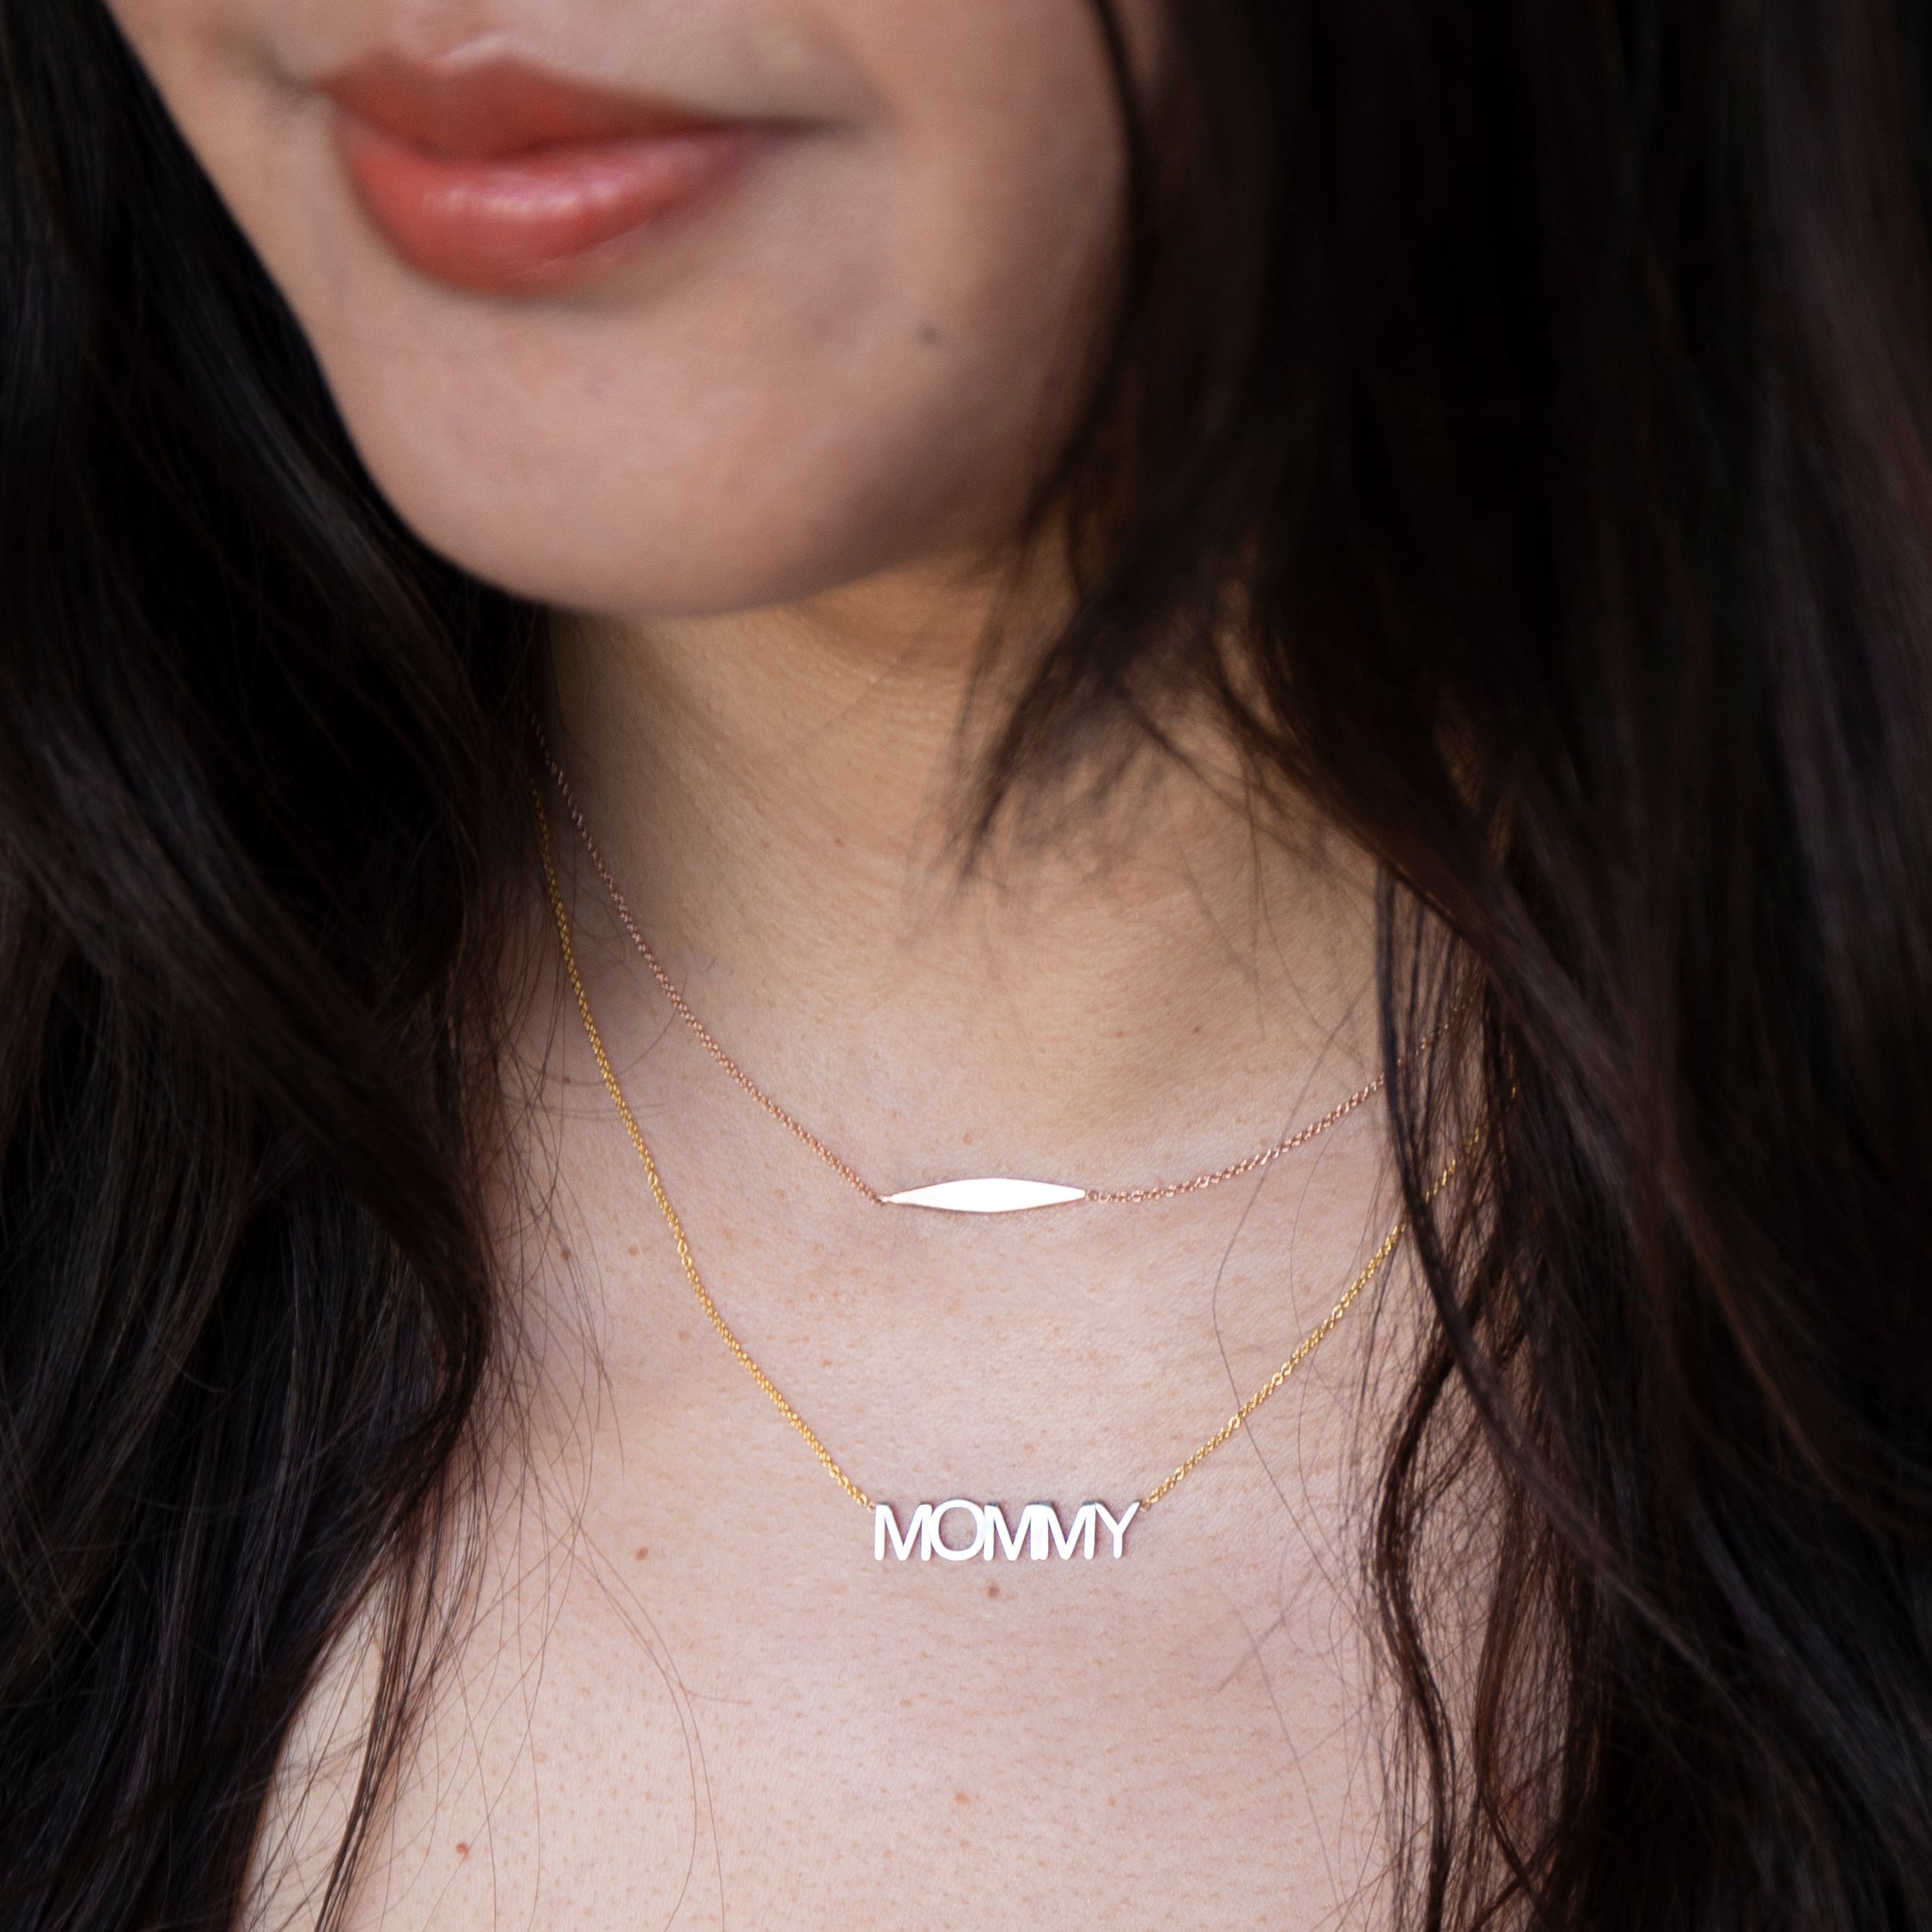 MOMMY Necklace – Maya Brenner